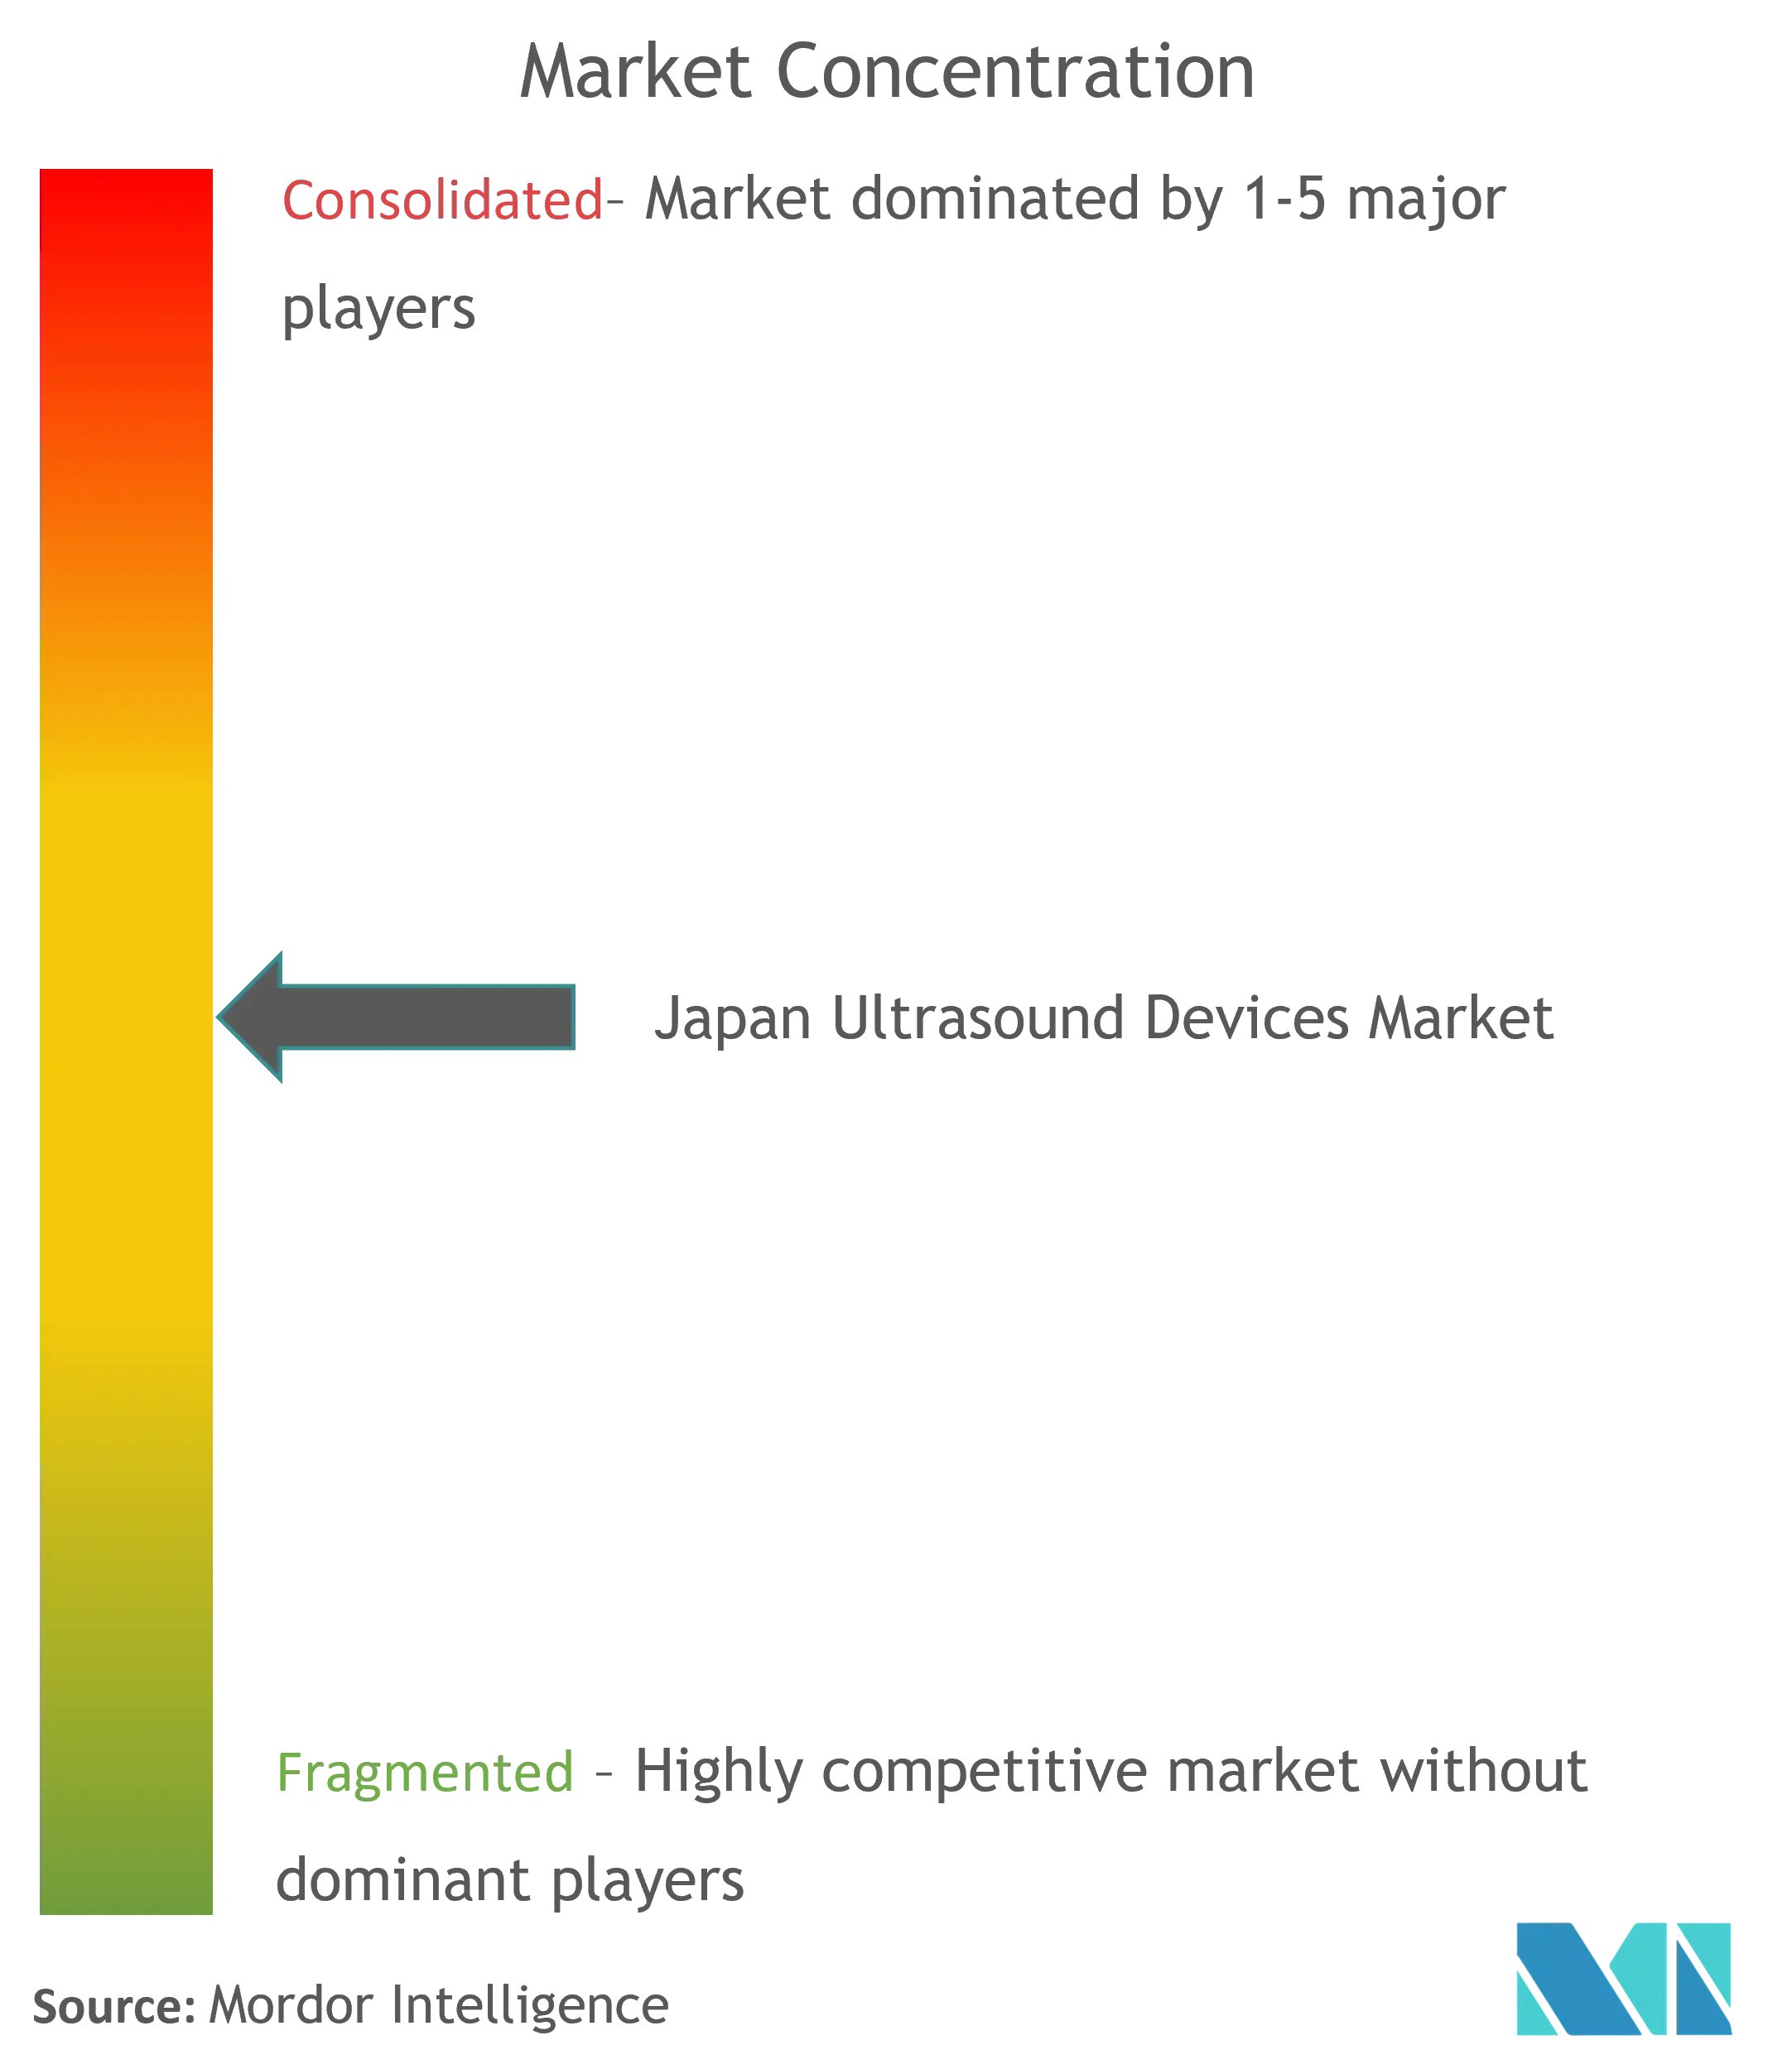 Japan Ultrasound Devices Market Concentration